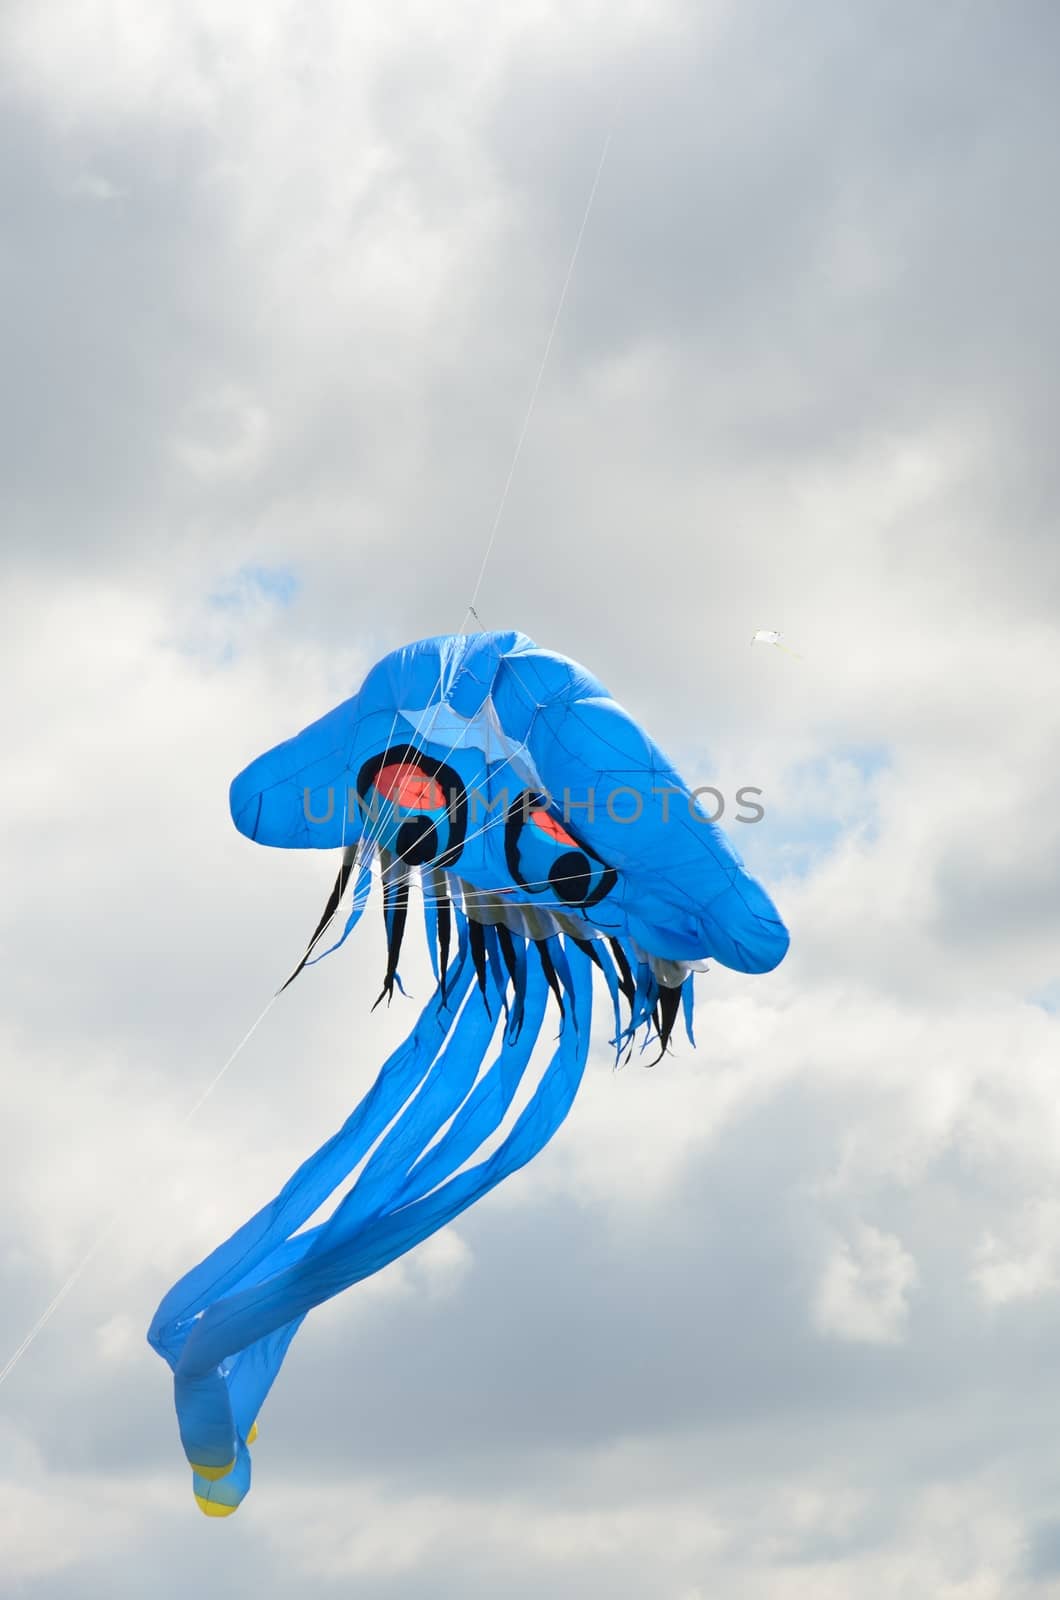 Blue Jellyfish kite by pauws99